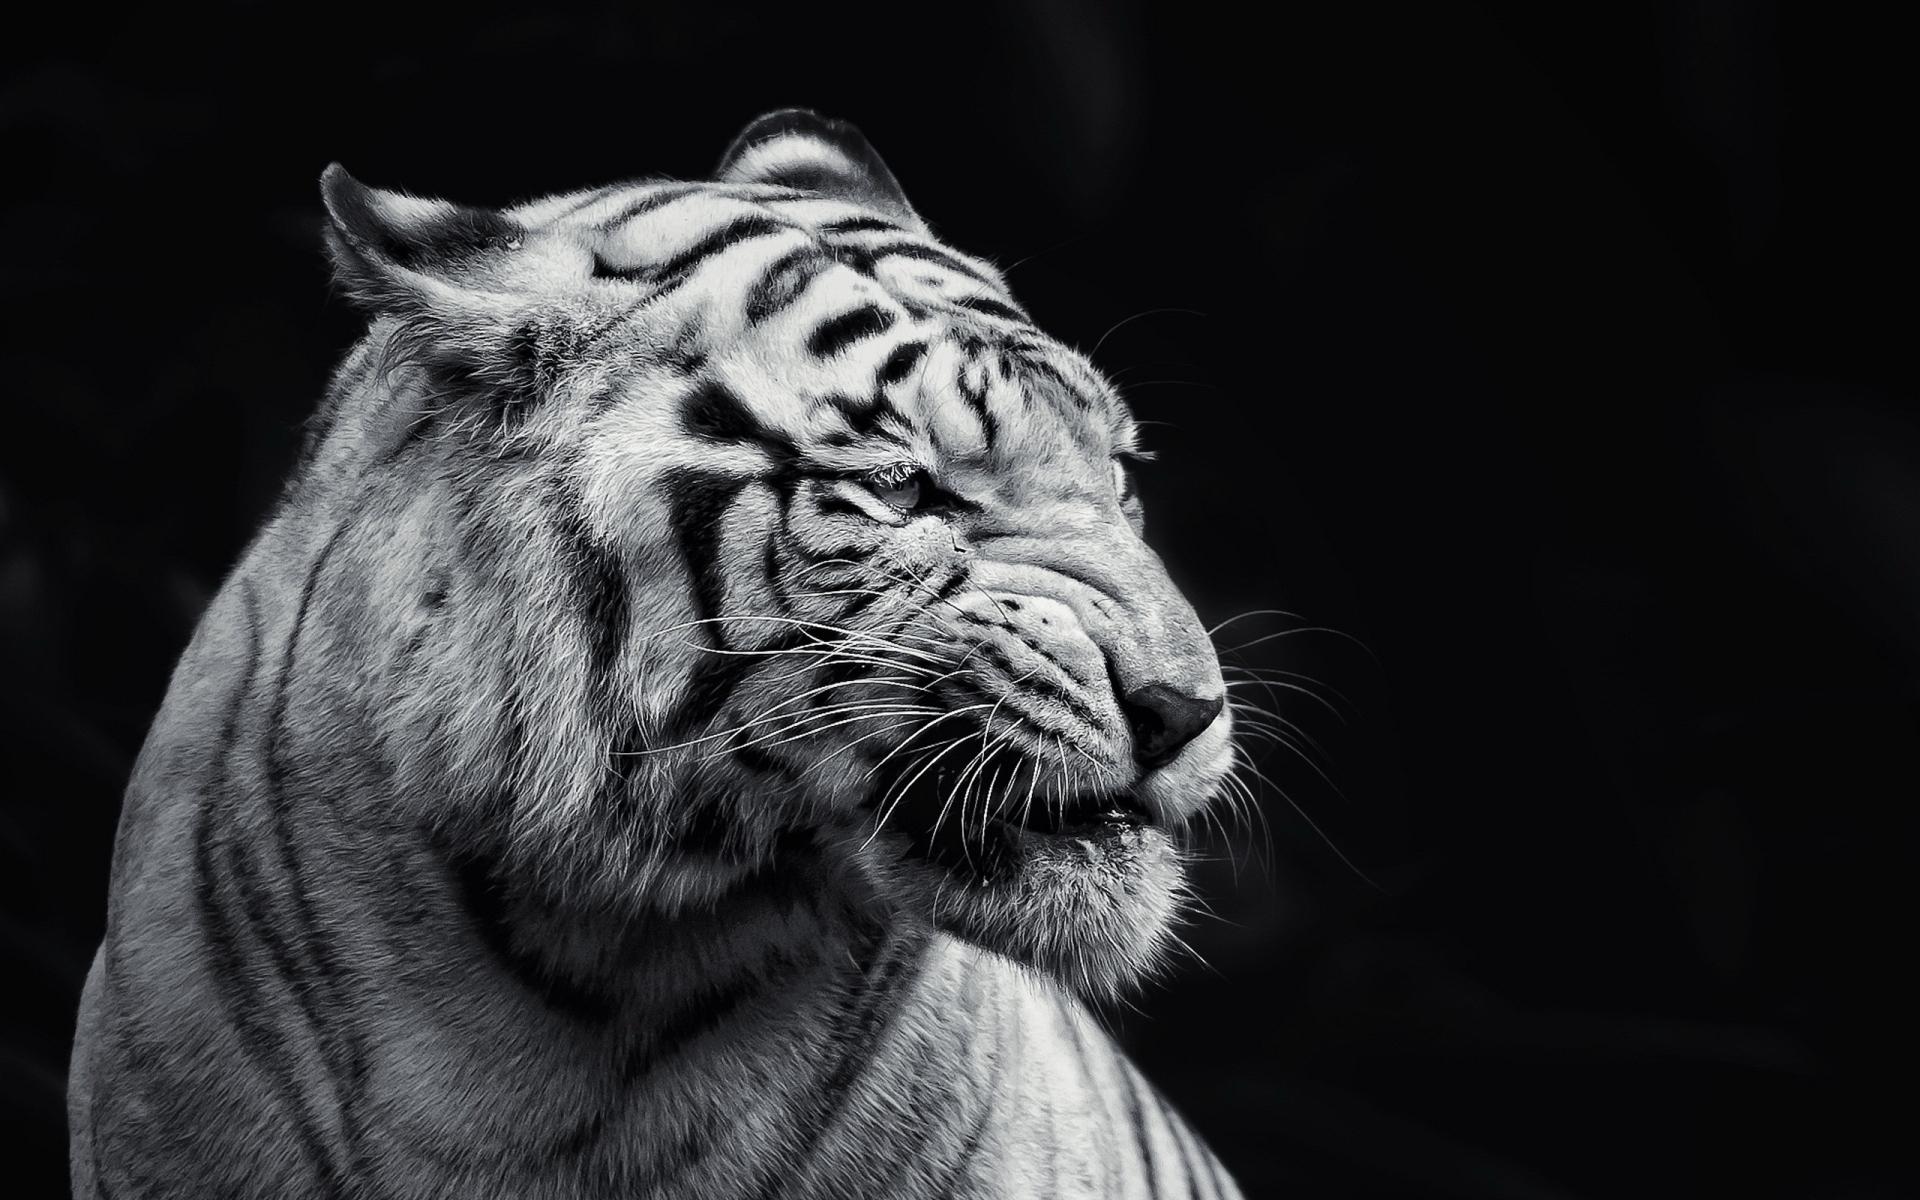 Tiger wallpaper HD free download